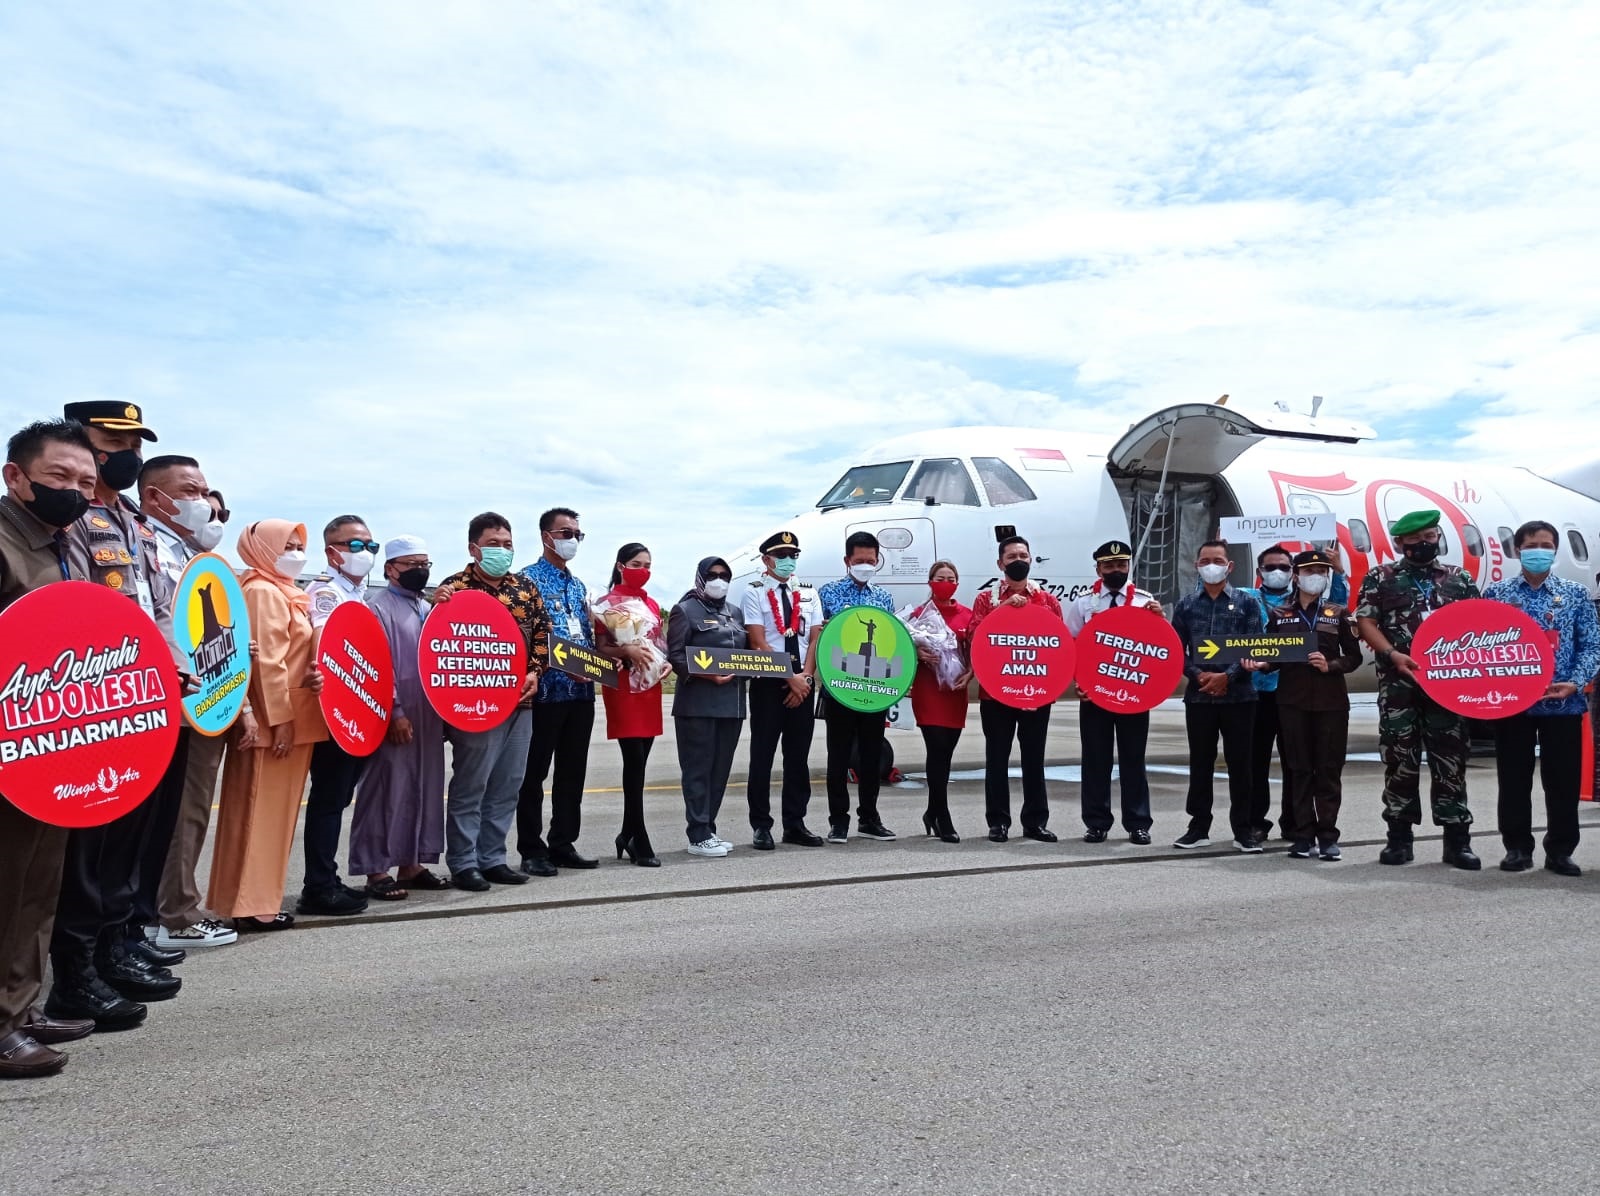 Wings Air meresmikan rute penerbangan perdana dari Banjarmasin ke Trinsing